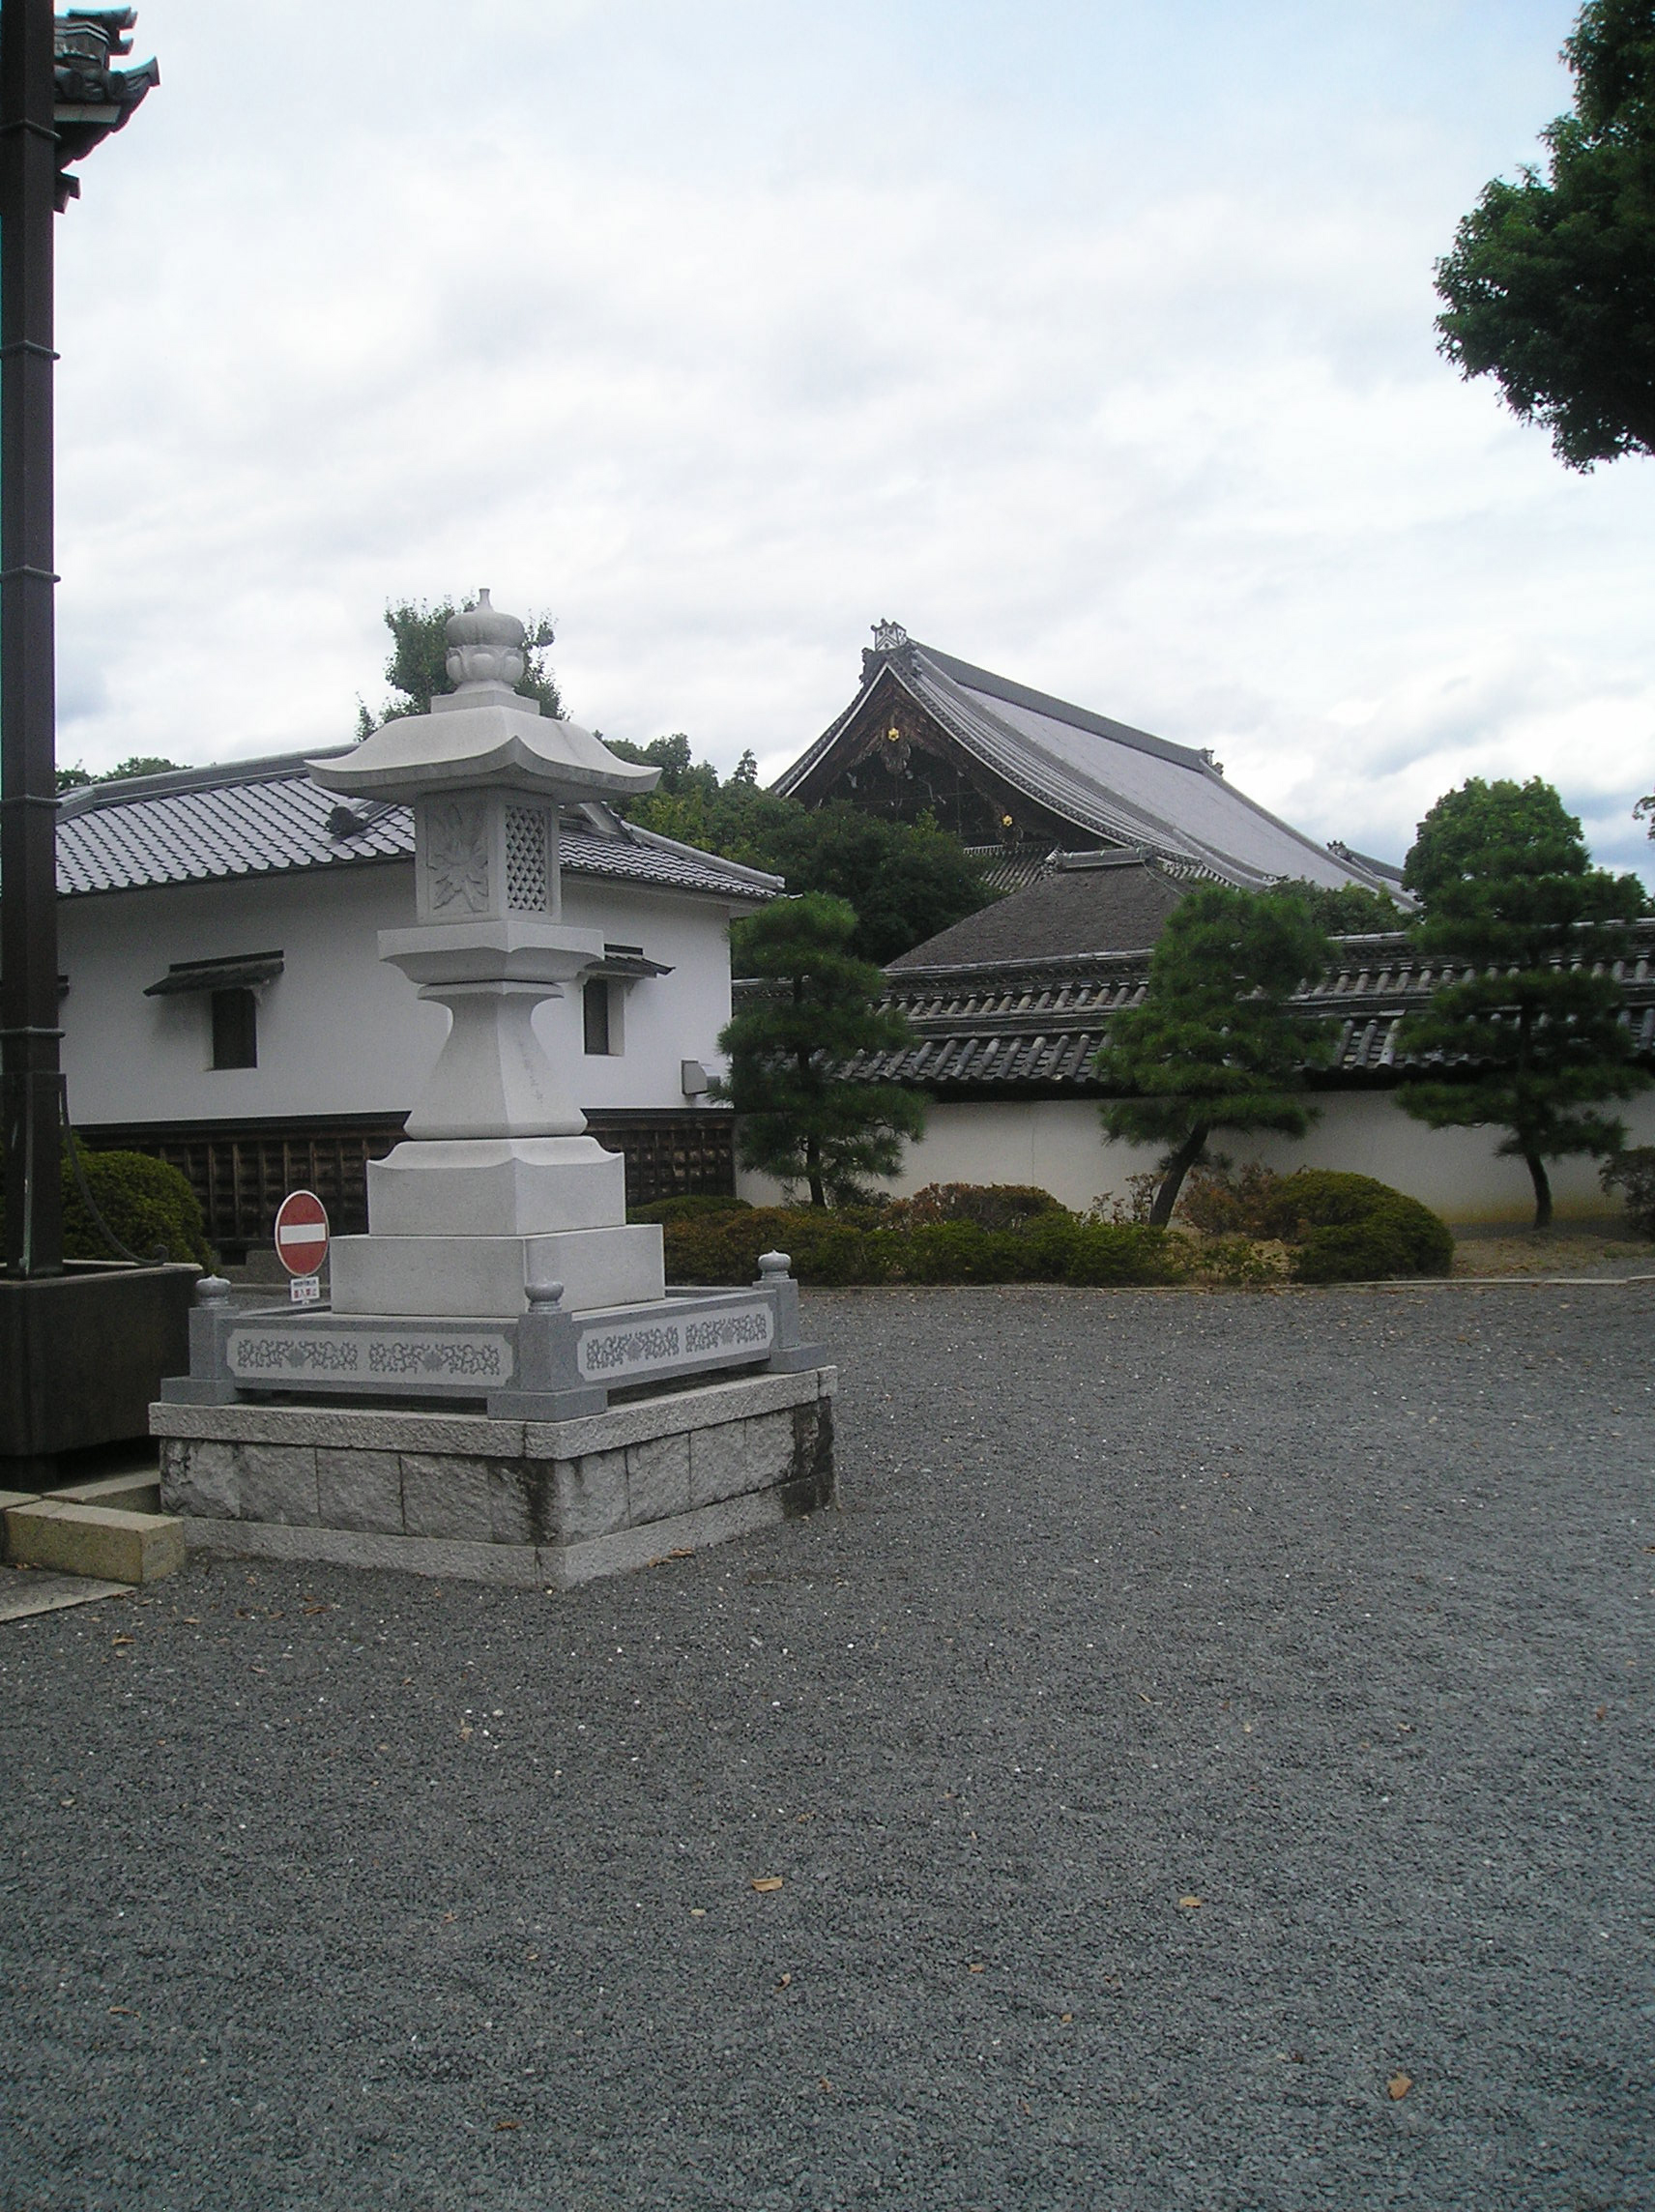 Nishi-Honganji Temple in Kyoto